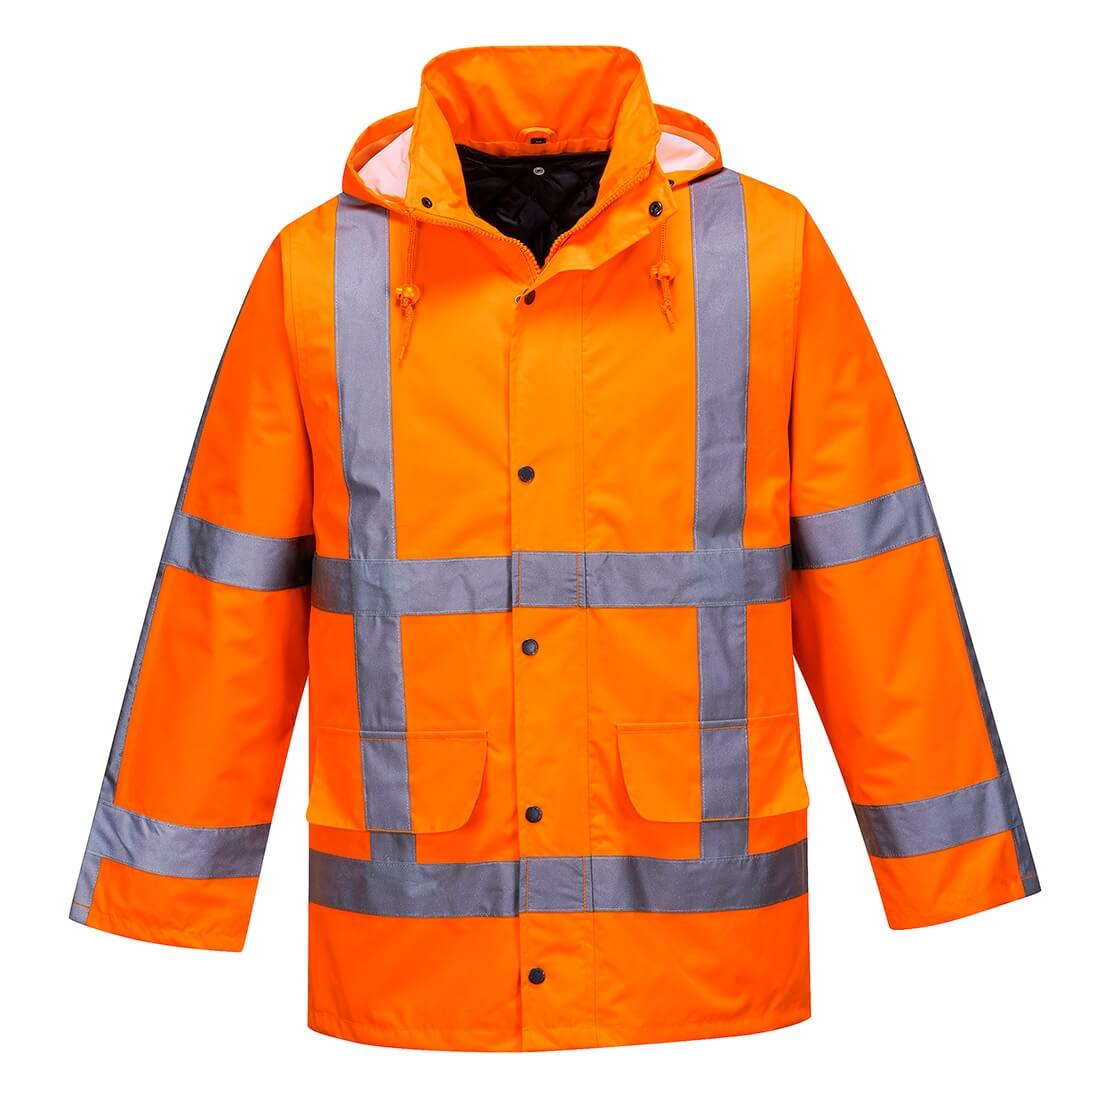 RWS Traffic Jacke - Arbeitskleidung